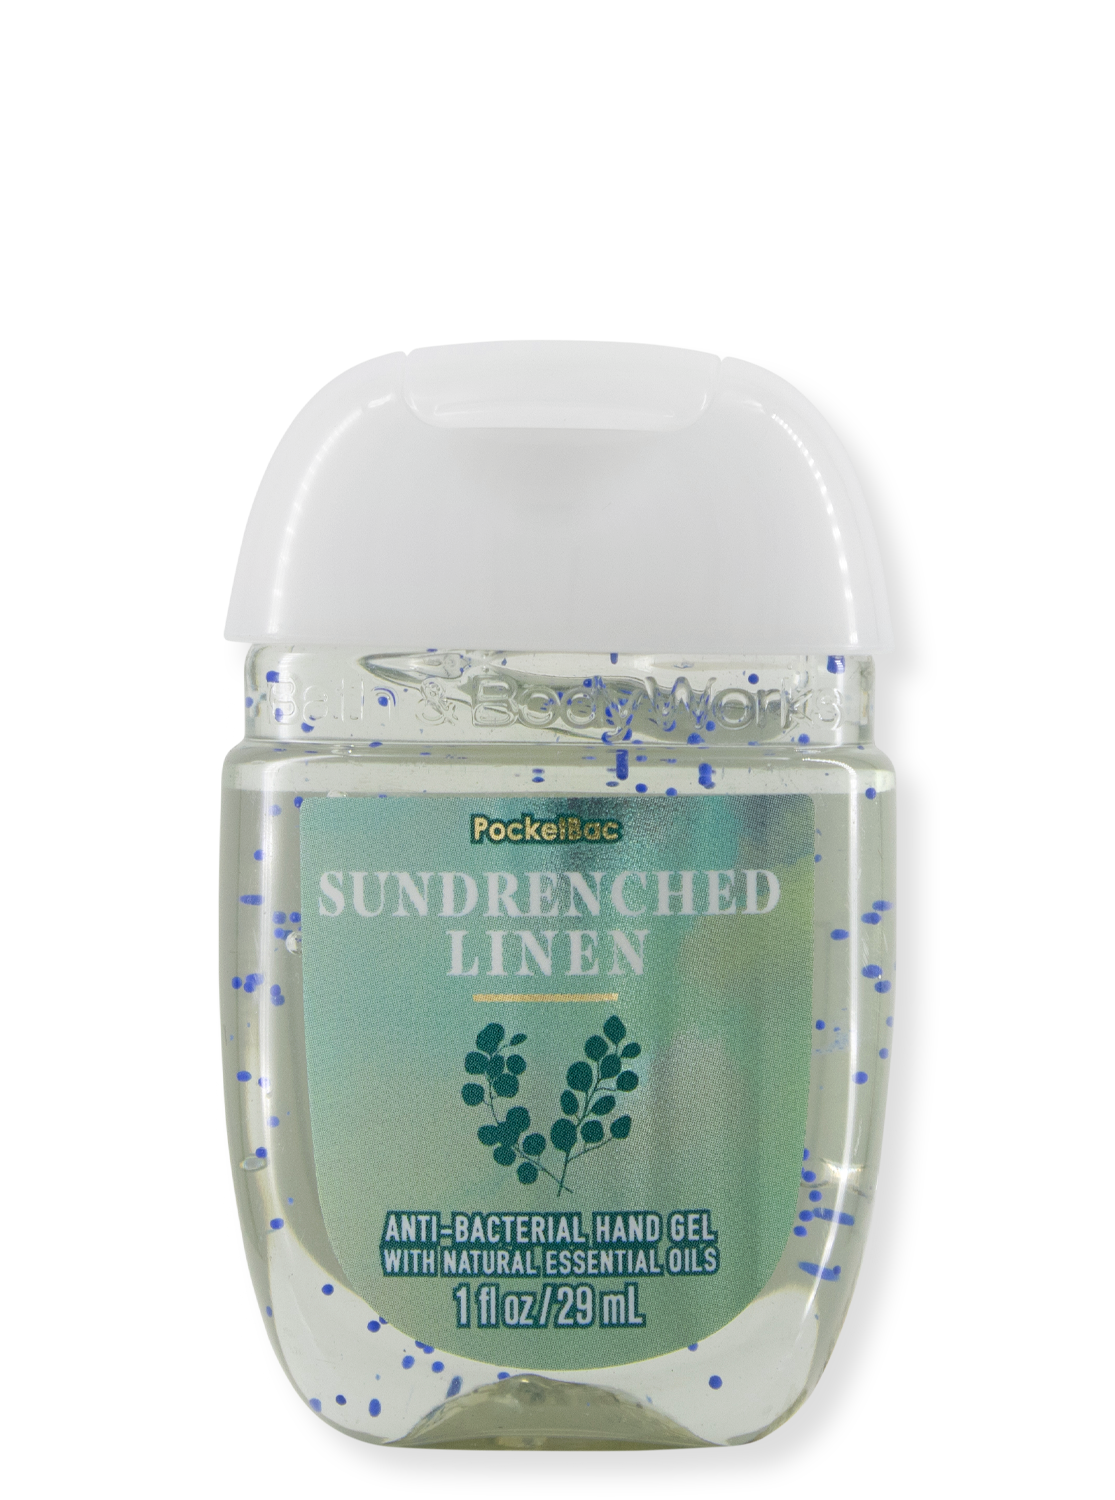 Hand-Desinfektionsgel - Sundrenched Linen - 29ml